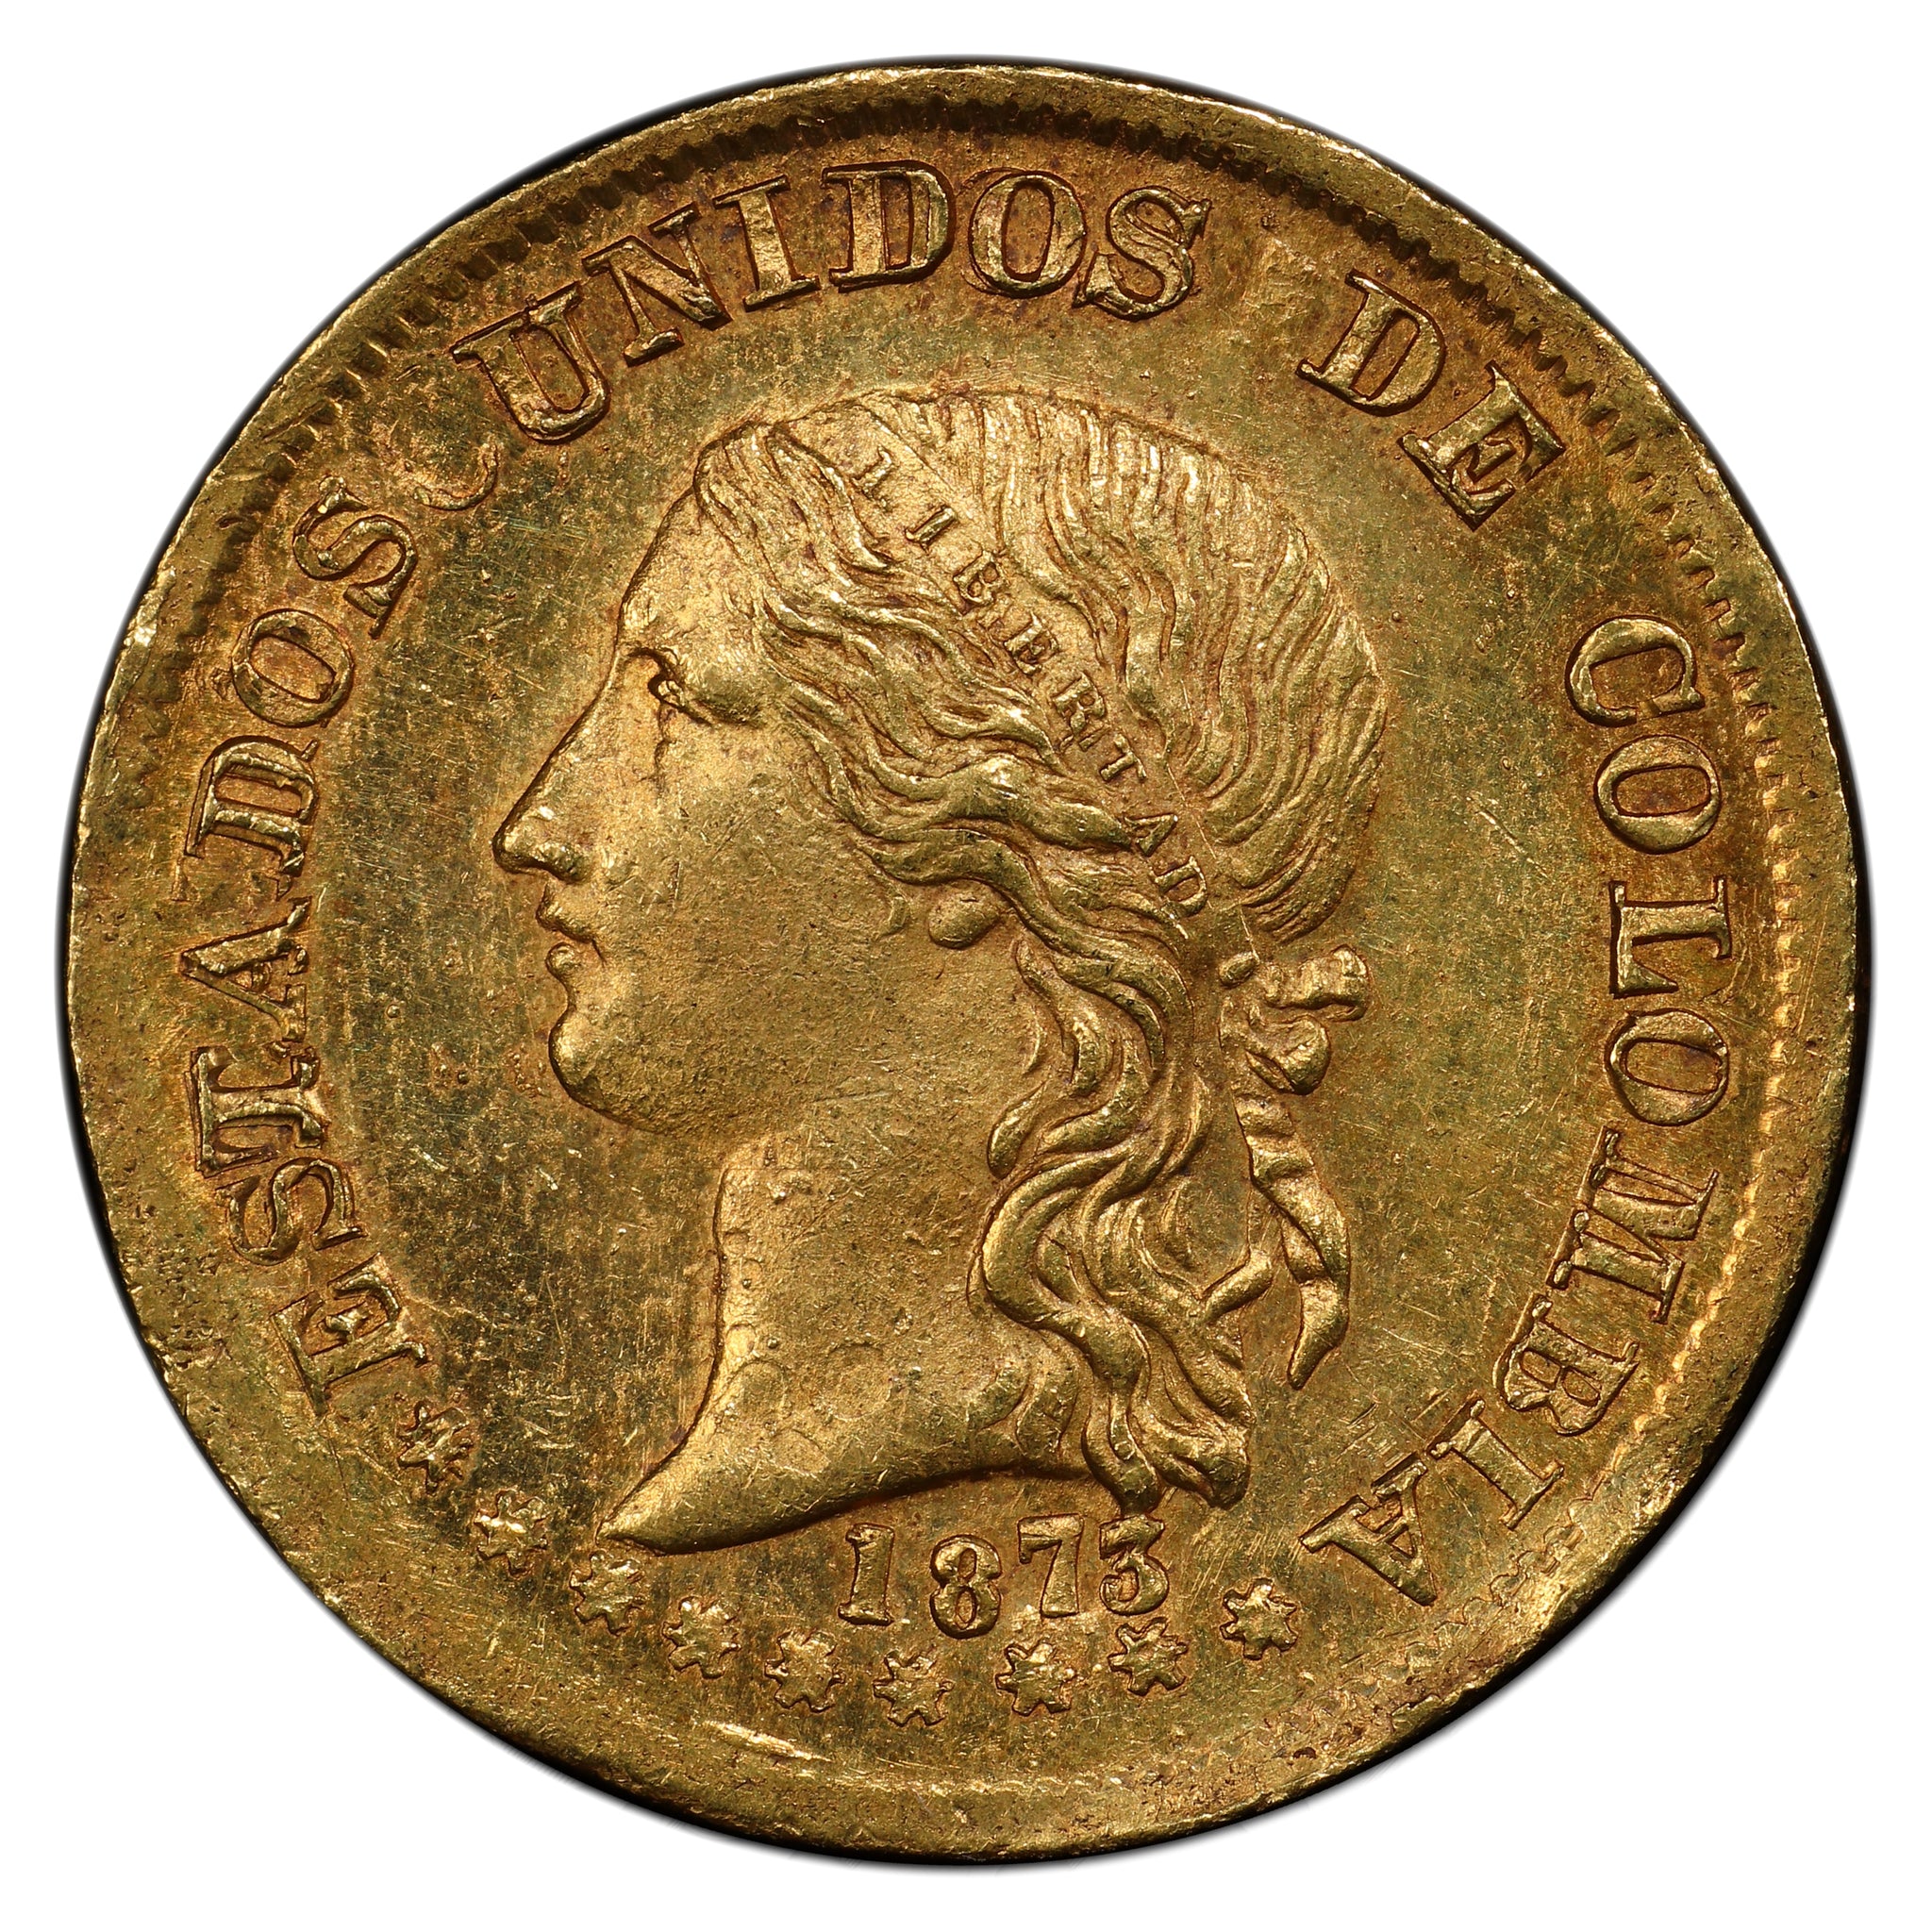 RARE! Colombia - Gold 20 Pesos 1873 Popayan Mint - MS-63 PCGS Gold Shi